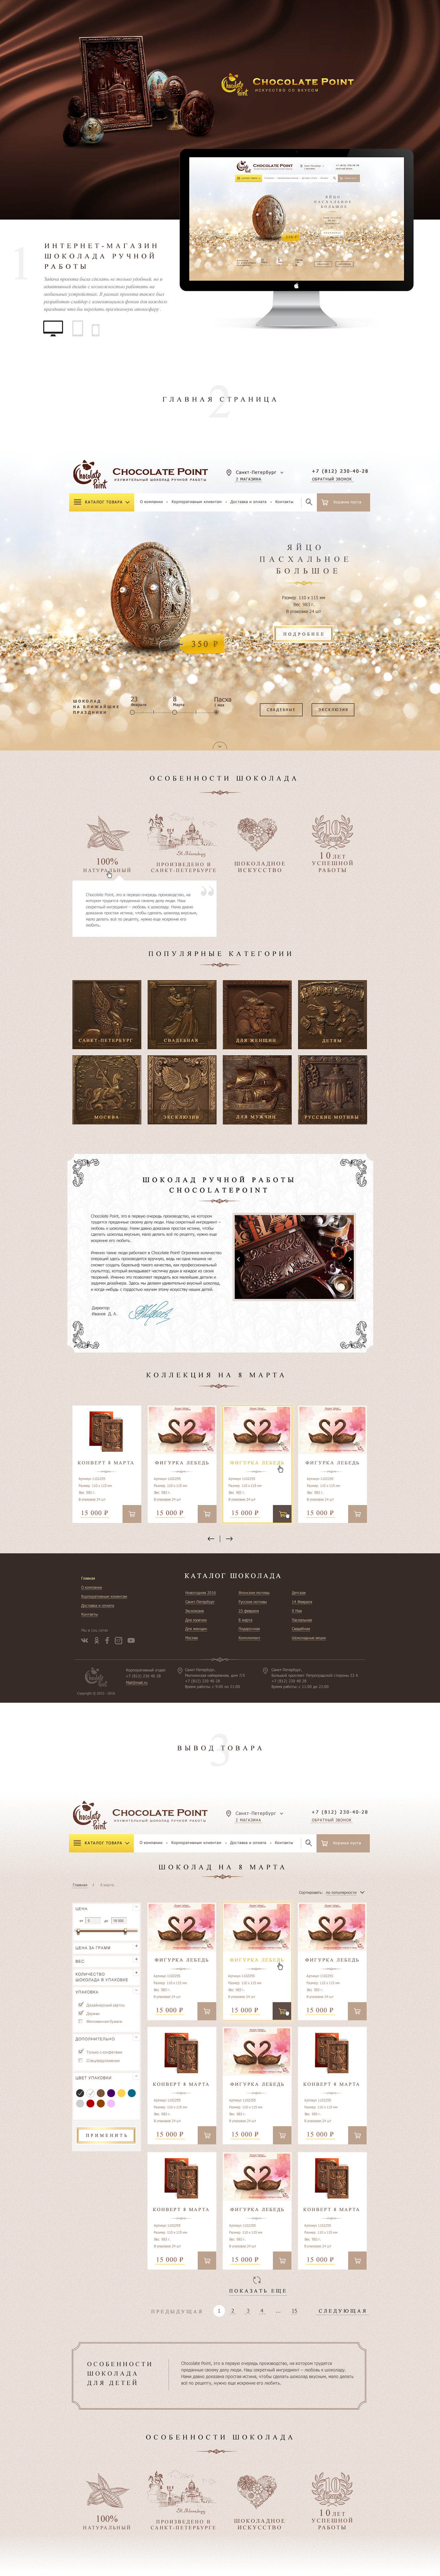 Website Web design clean mobile Ux site free shop chocolate